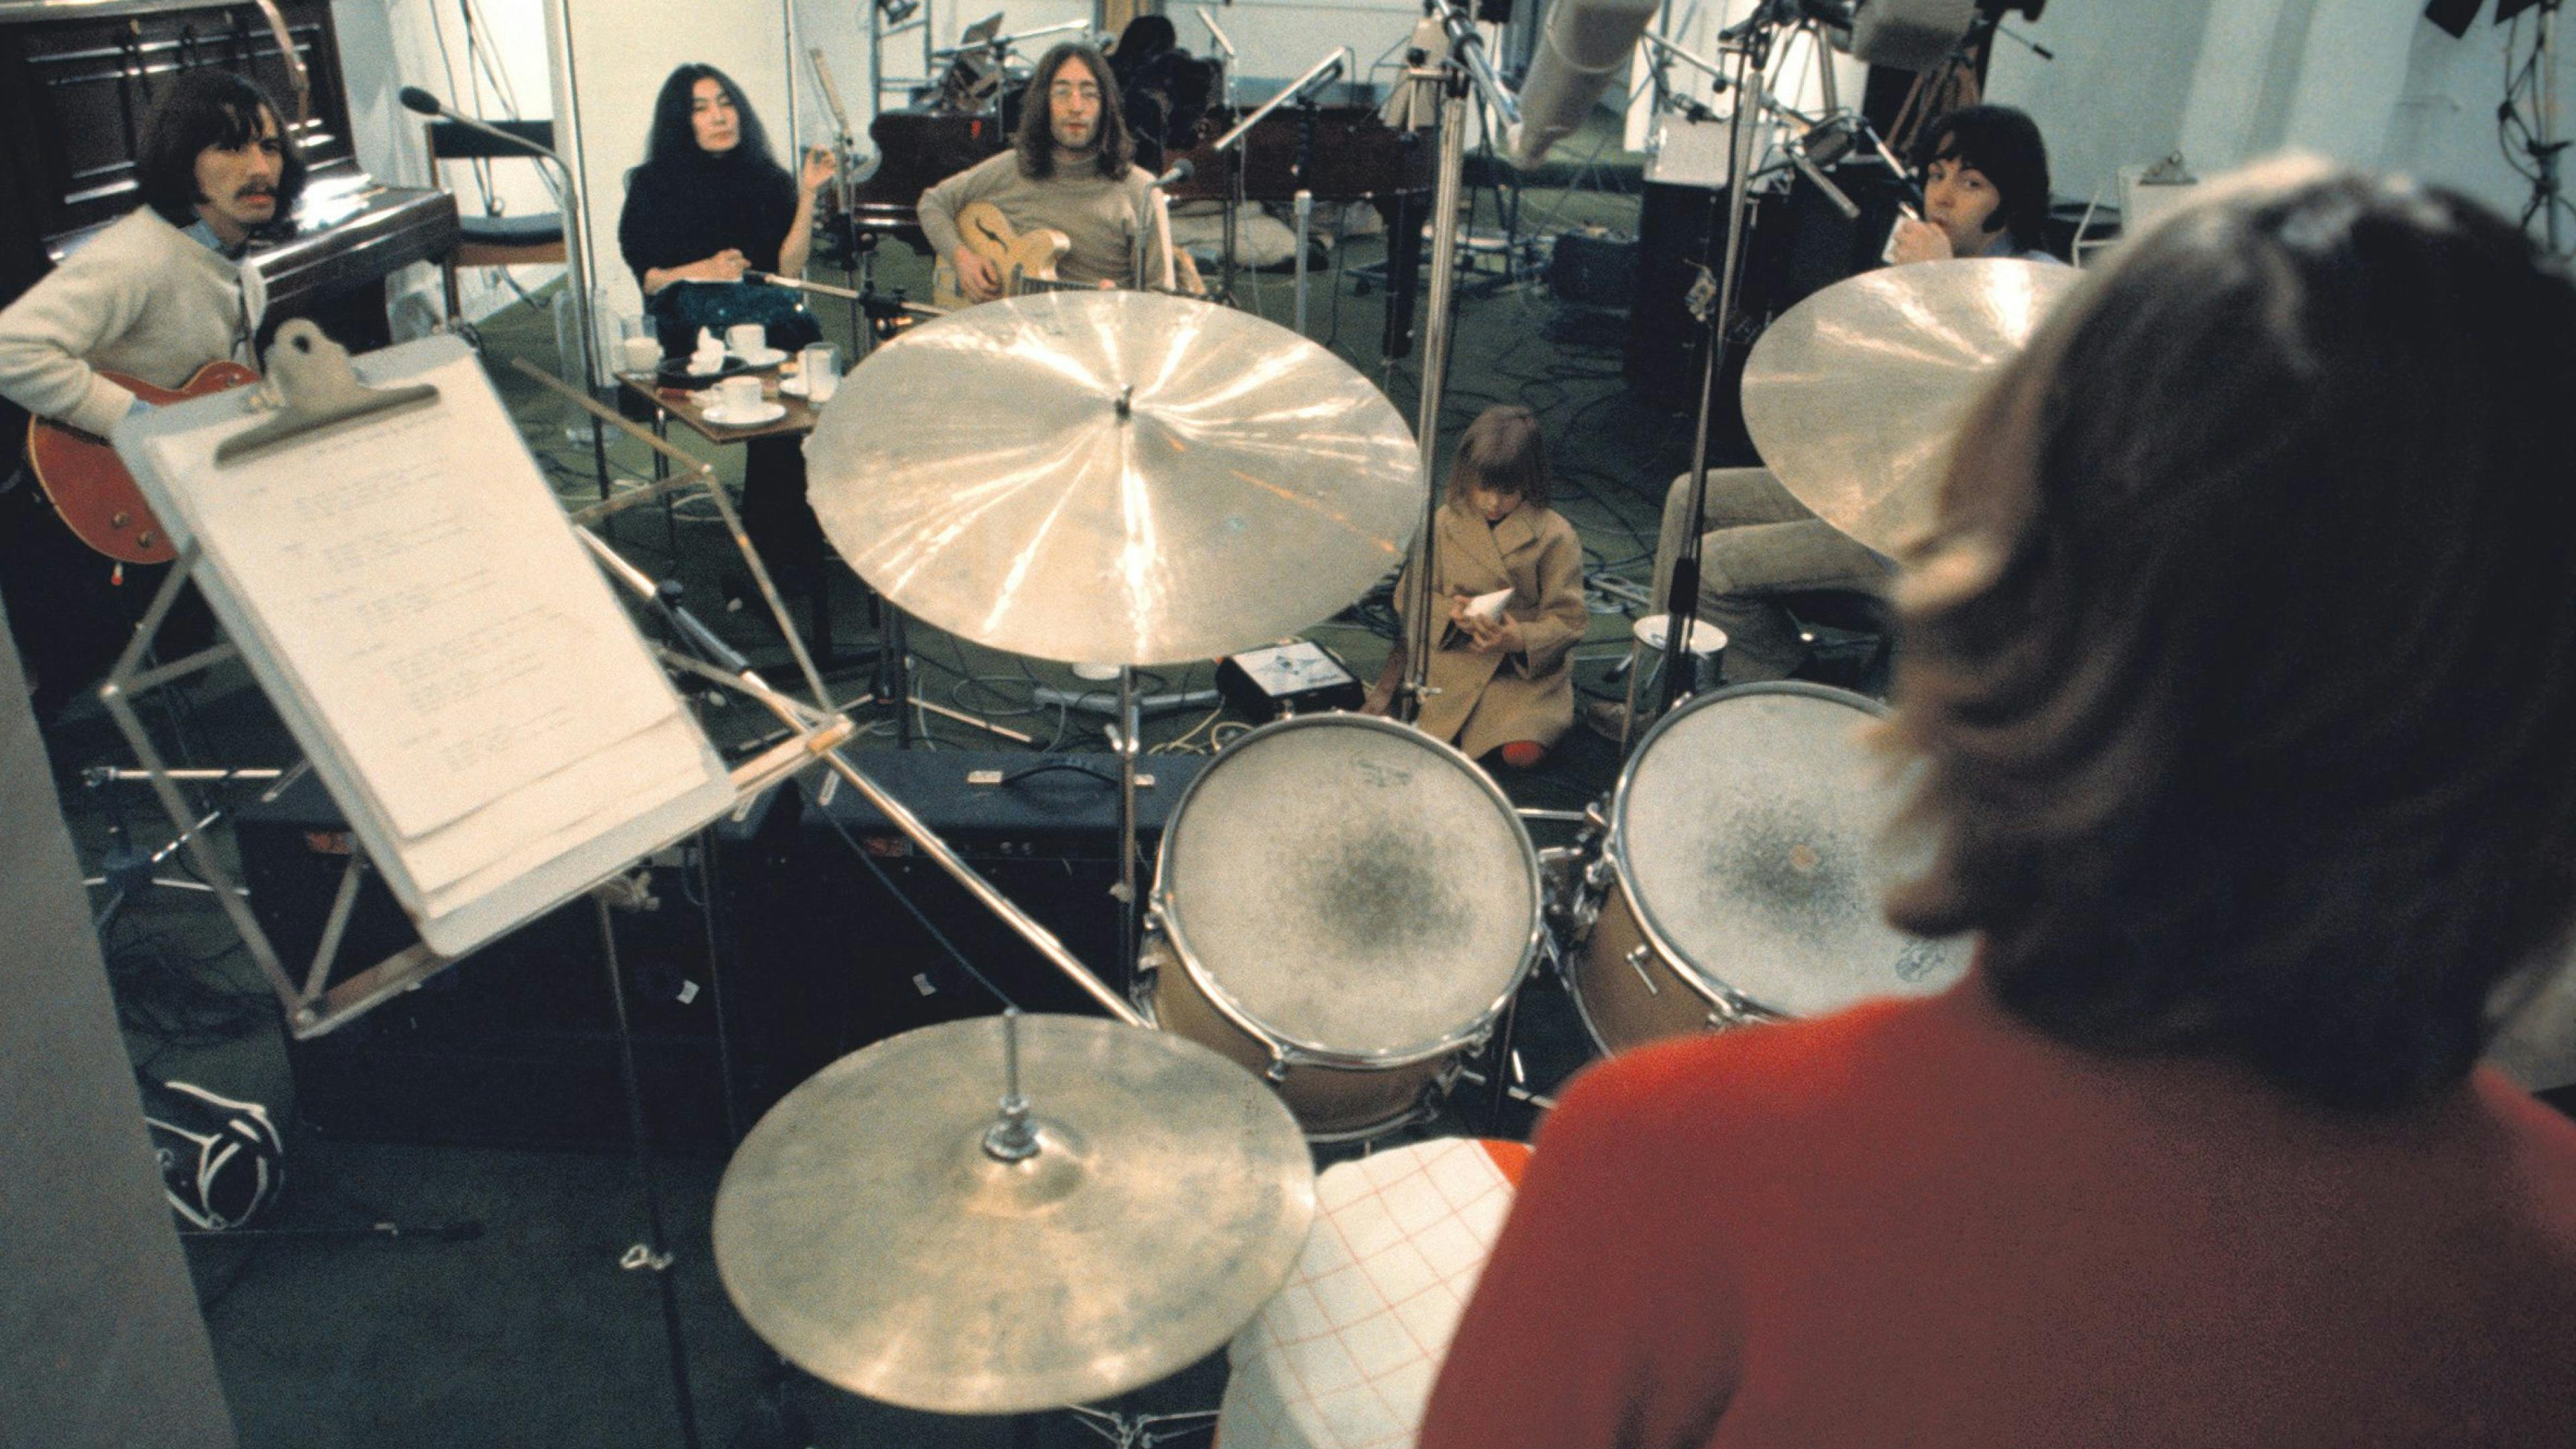 The Beatles jamming